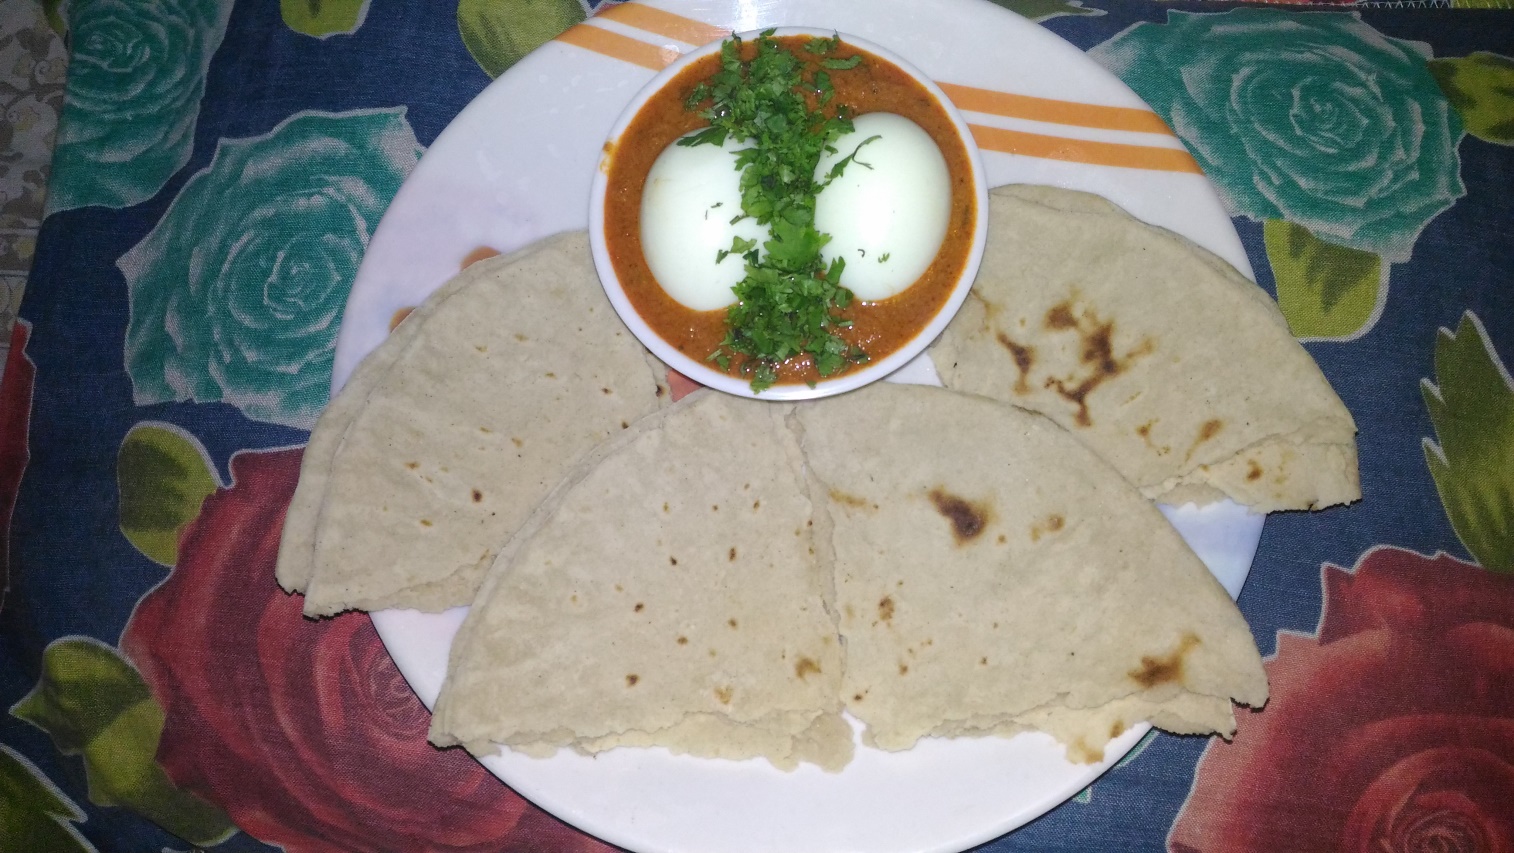 Anda curry with Bhakari or Chapati